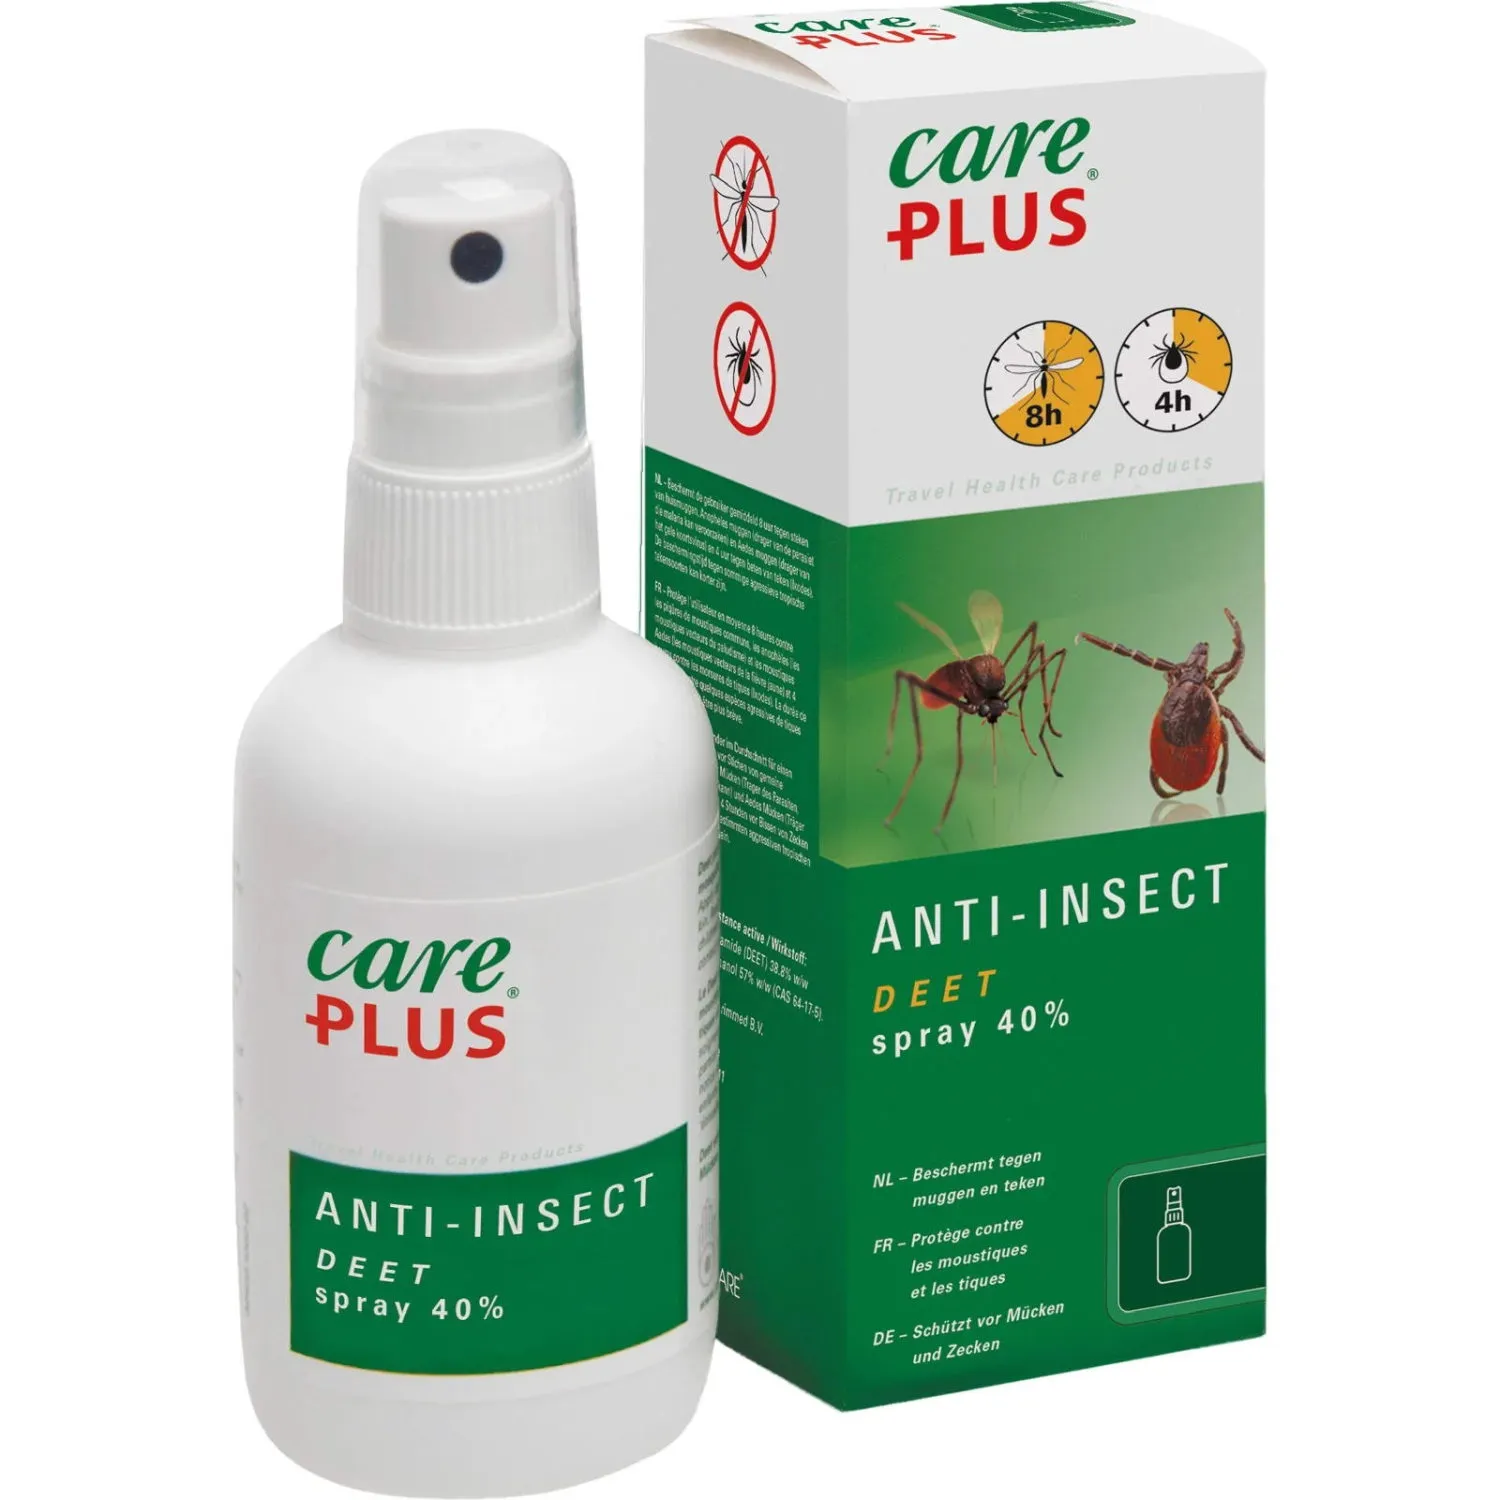 001_care-plus-anti-insect-deet-spray-40-100-ml-car-32906.jpg